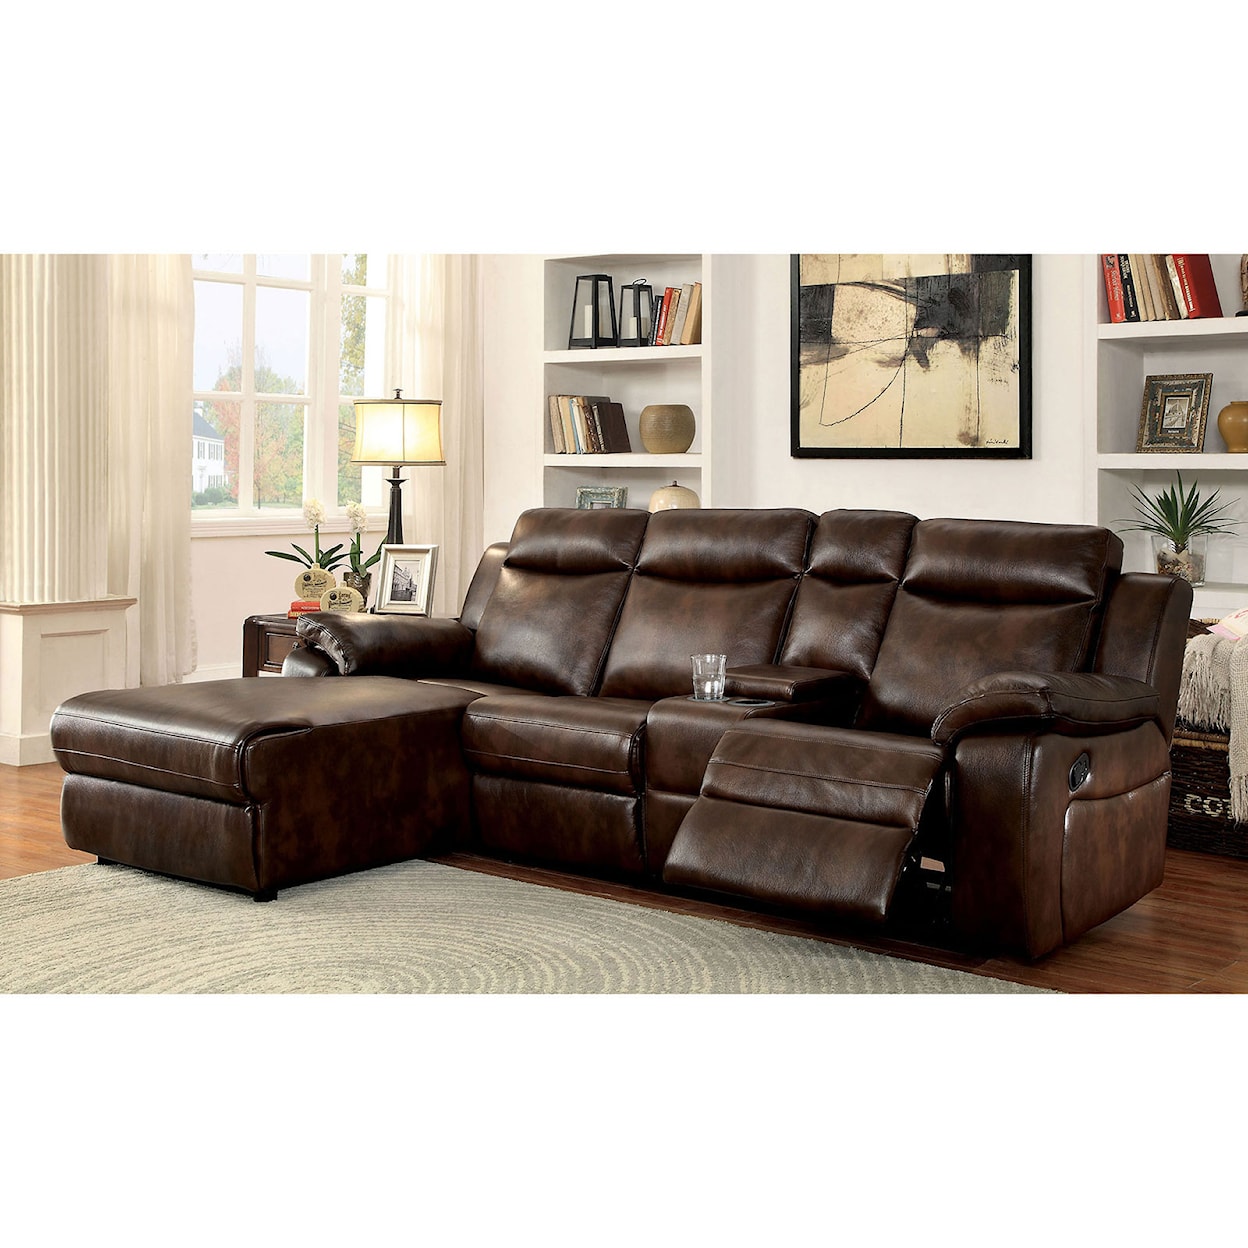 Furniture of America Hardy Sectional Sofa